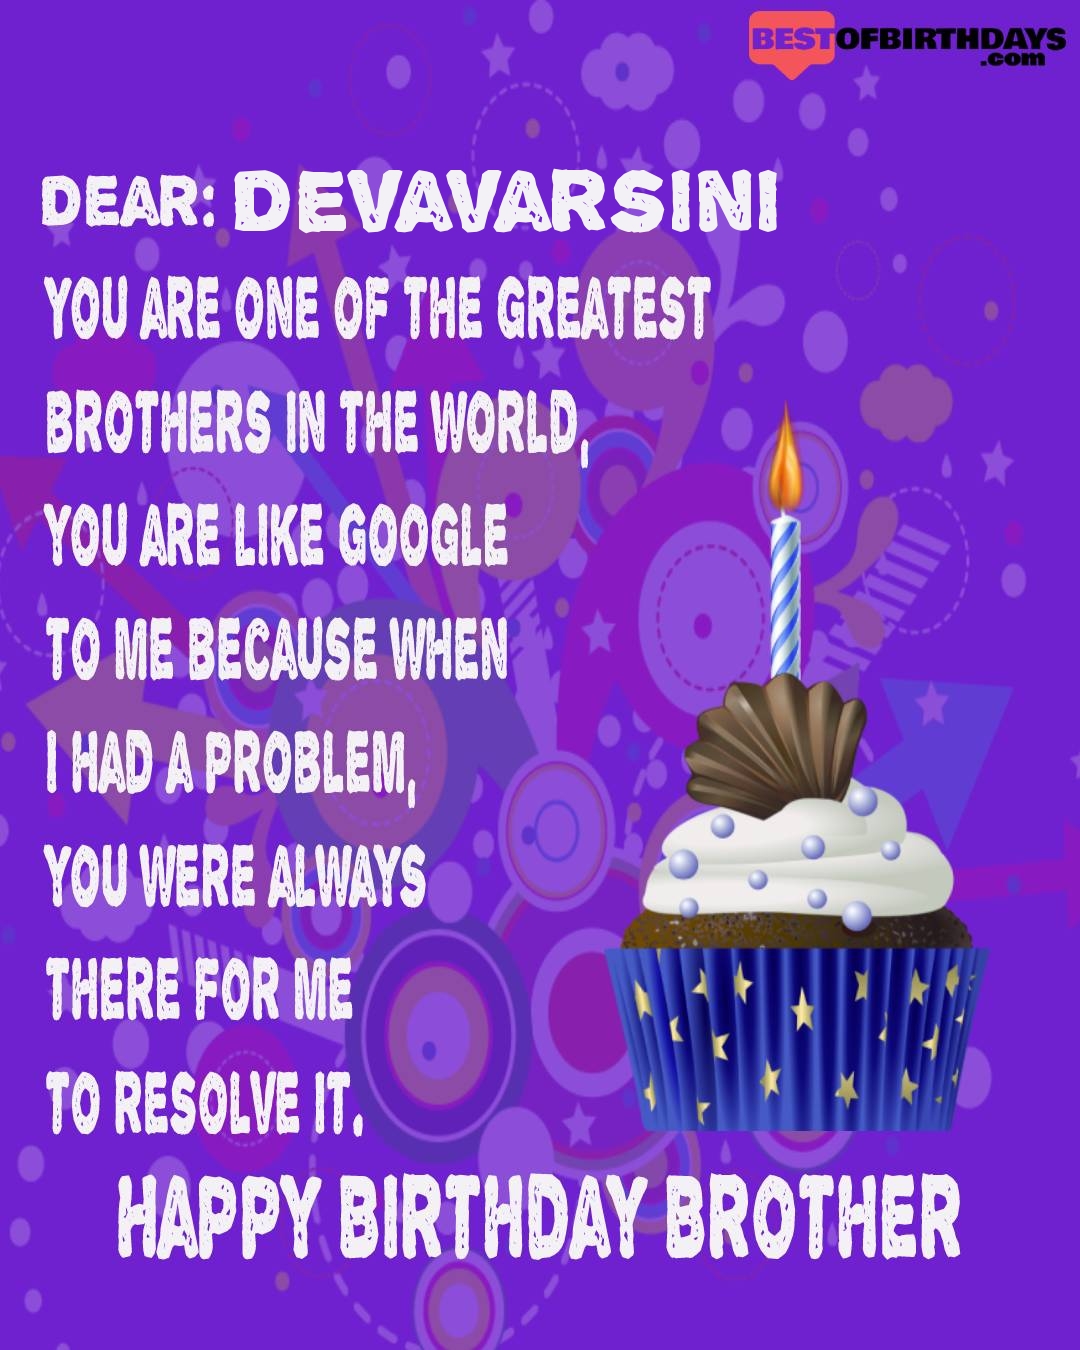 Happy birthday devavarsini bhai brother bro